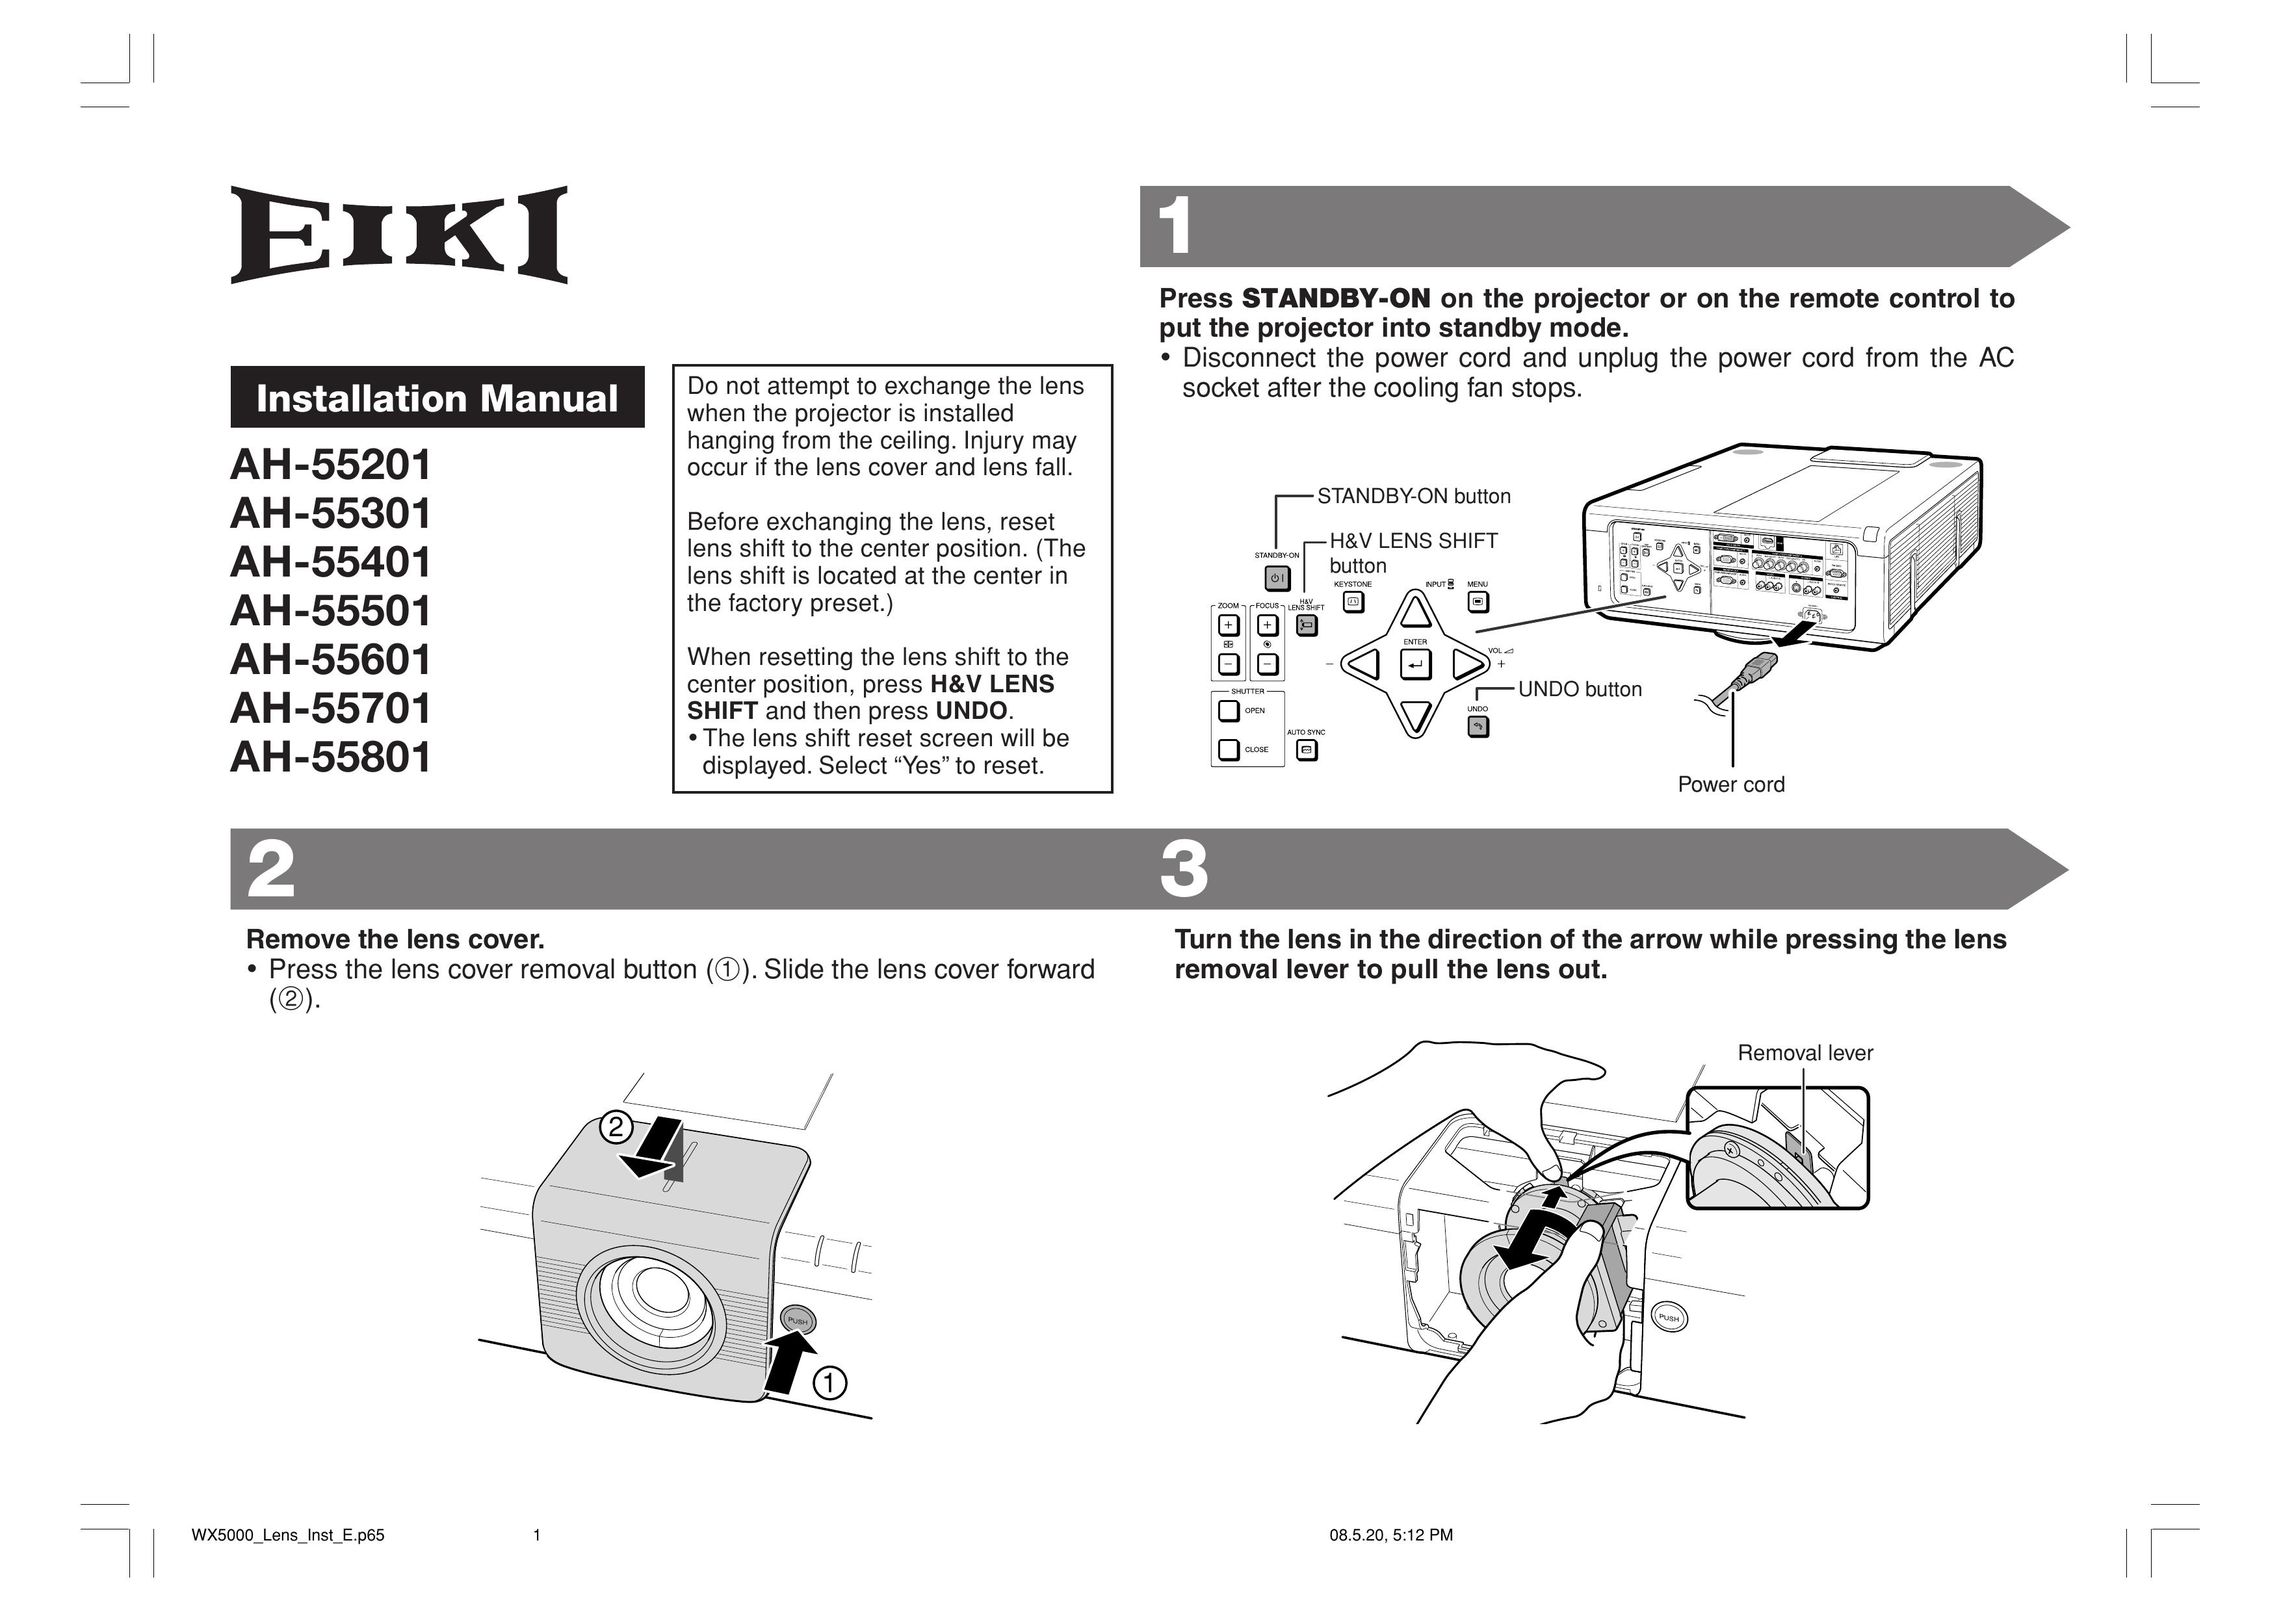 Eiki AH-55401 Projector User Manual